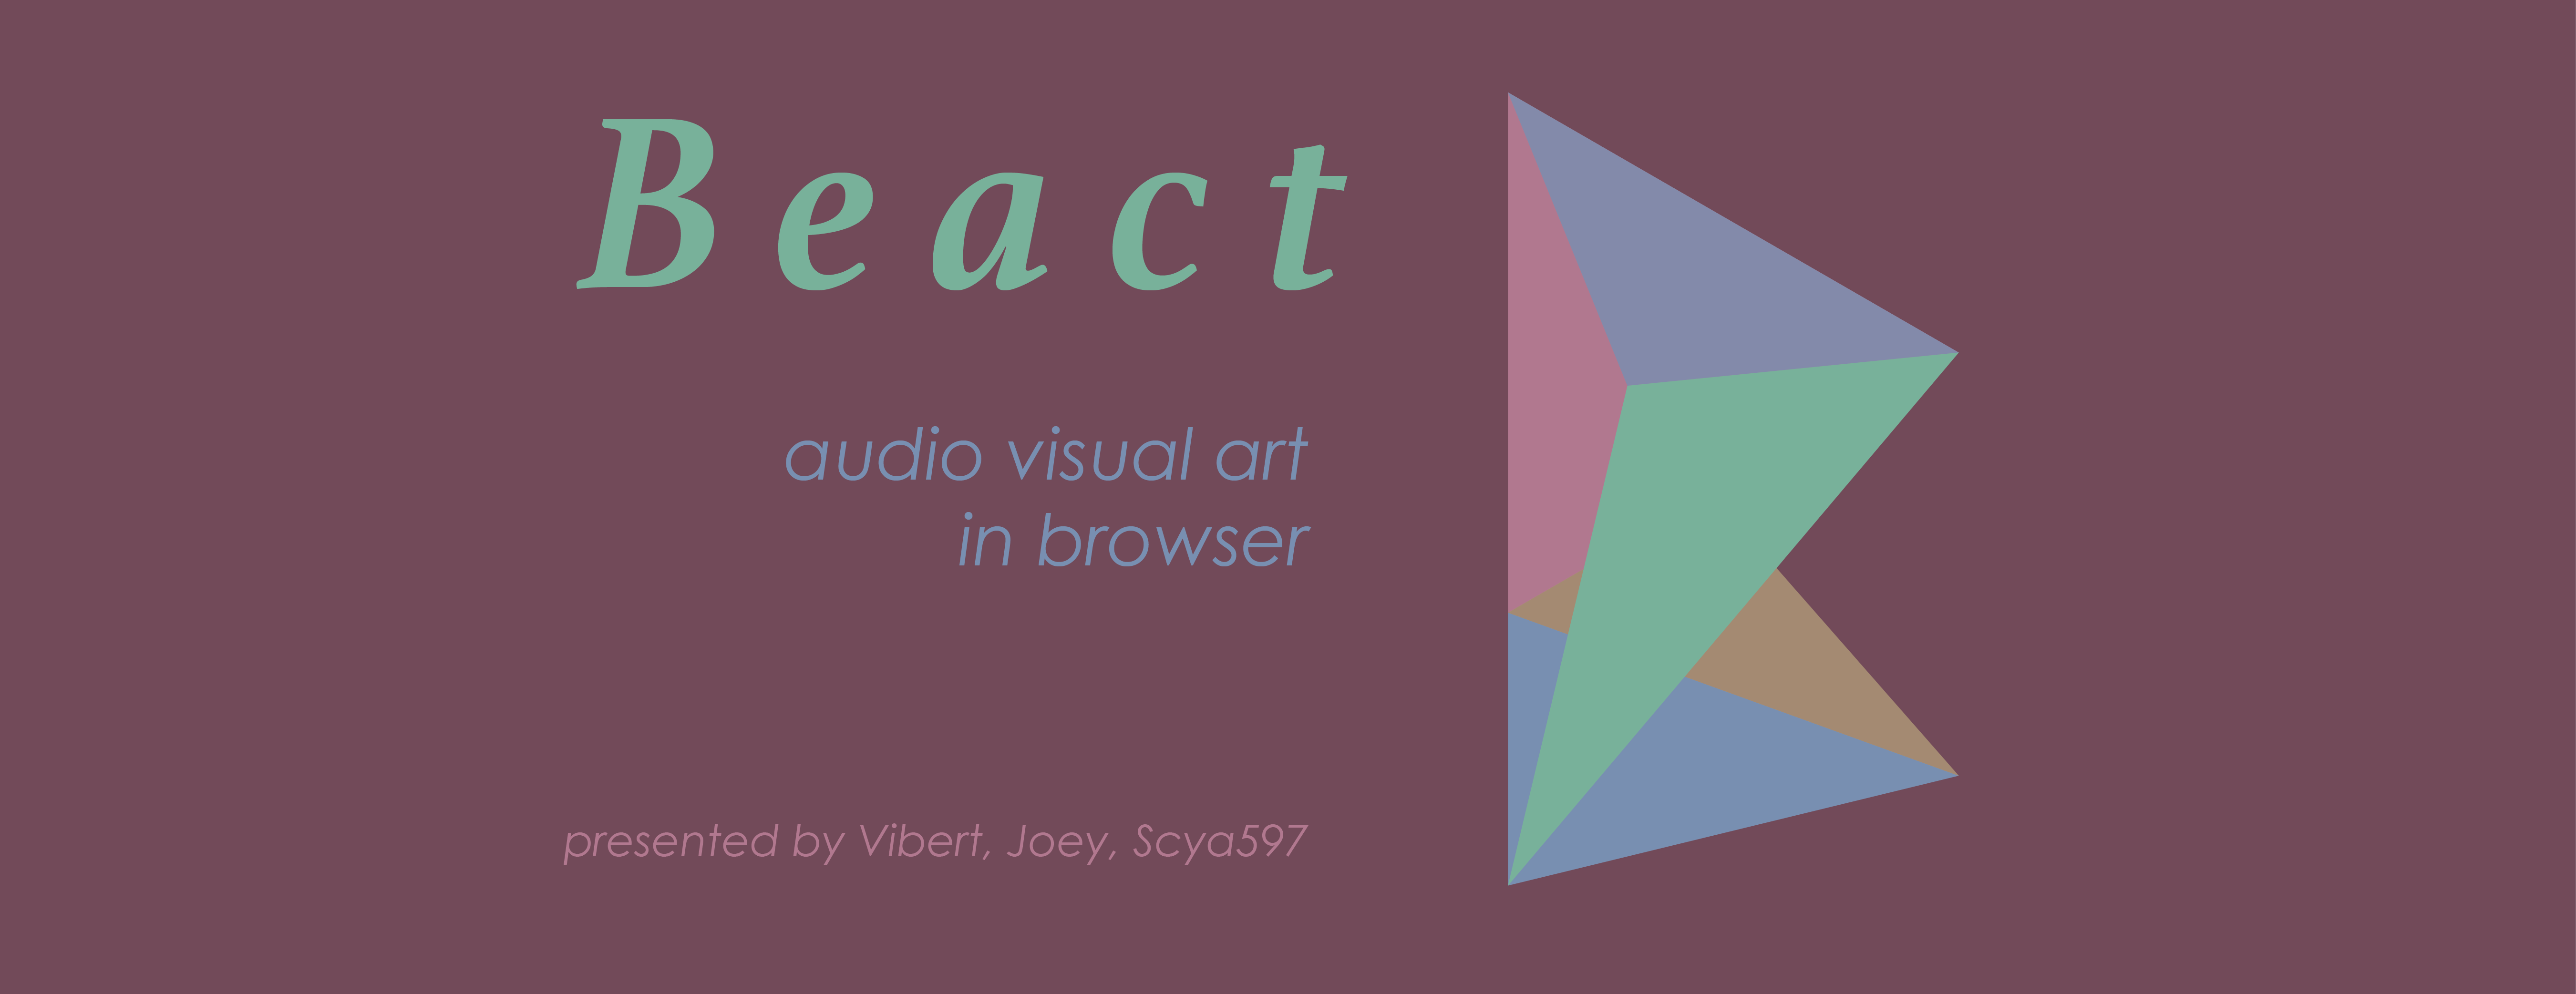 logo of beact